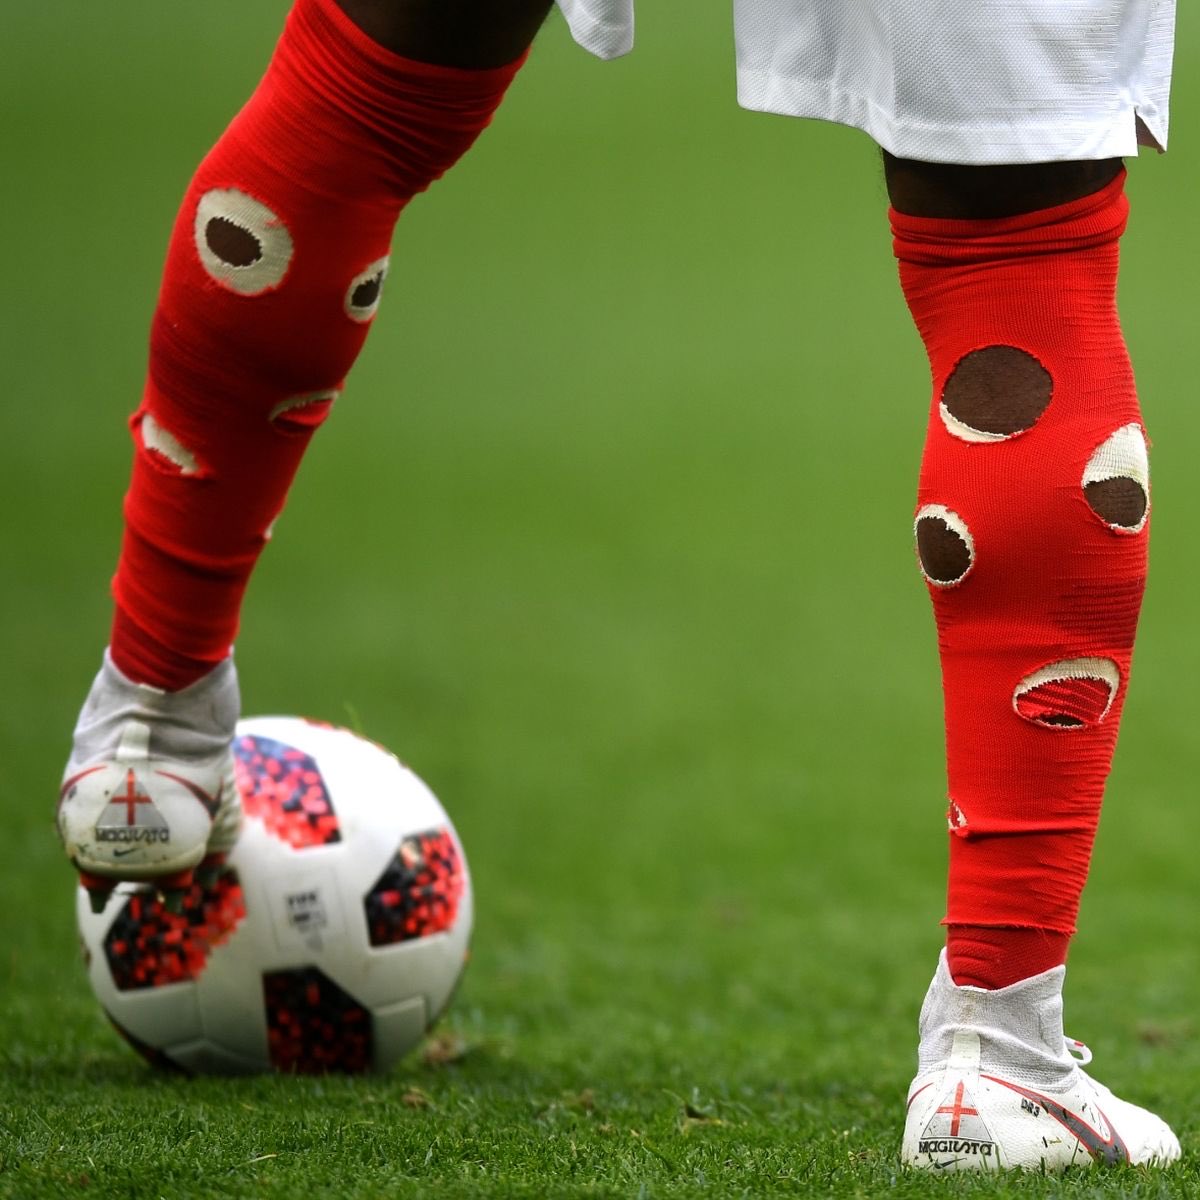 Why Do Footballers Cut Holes in Their Socks